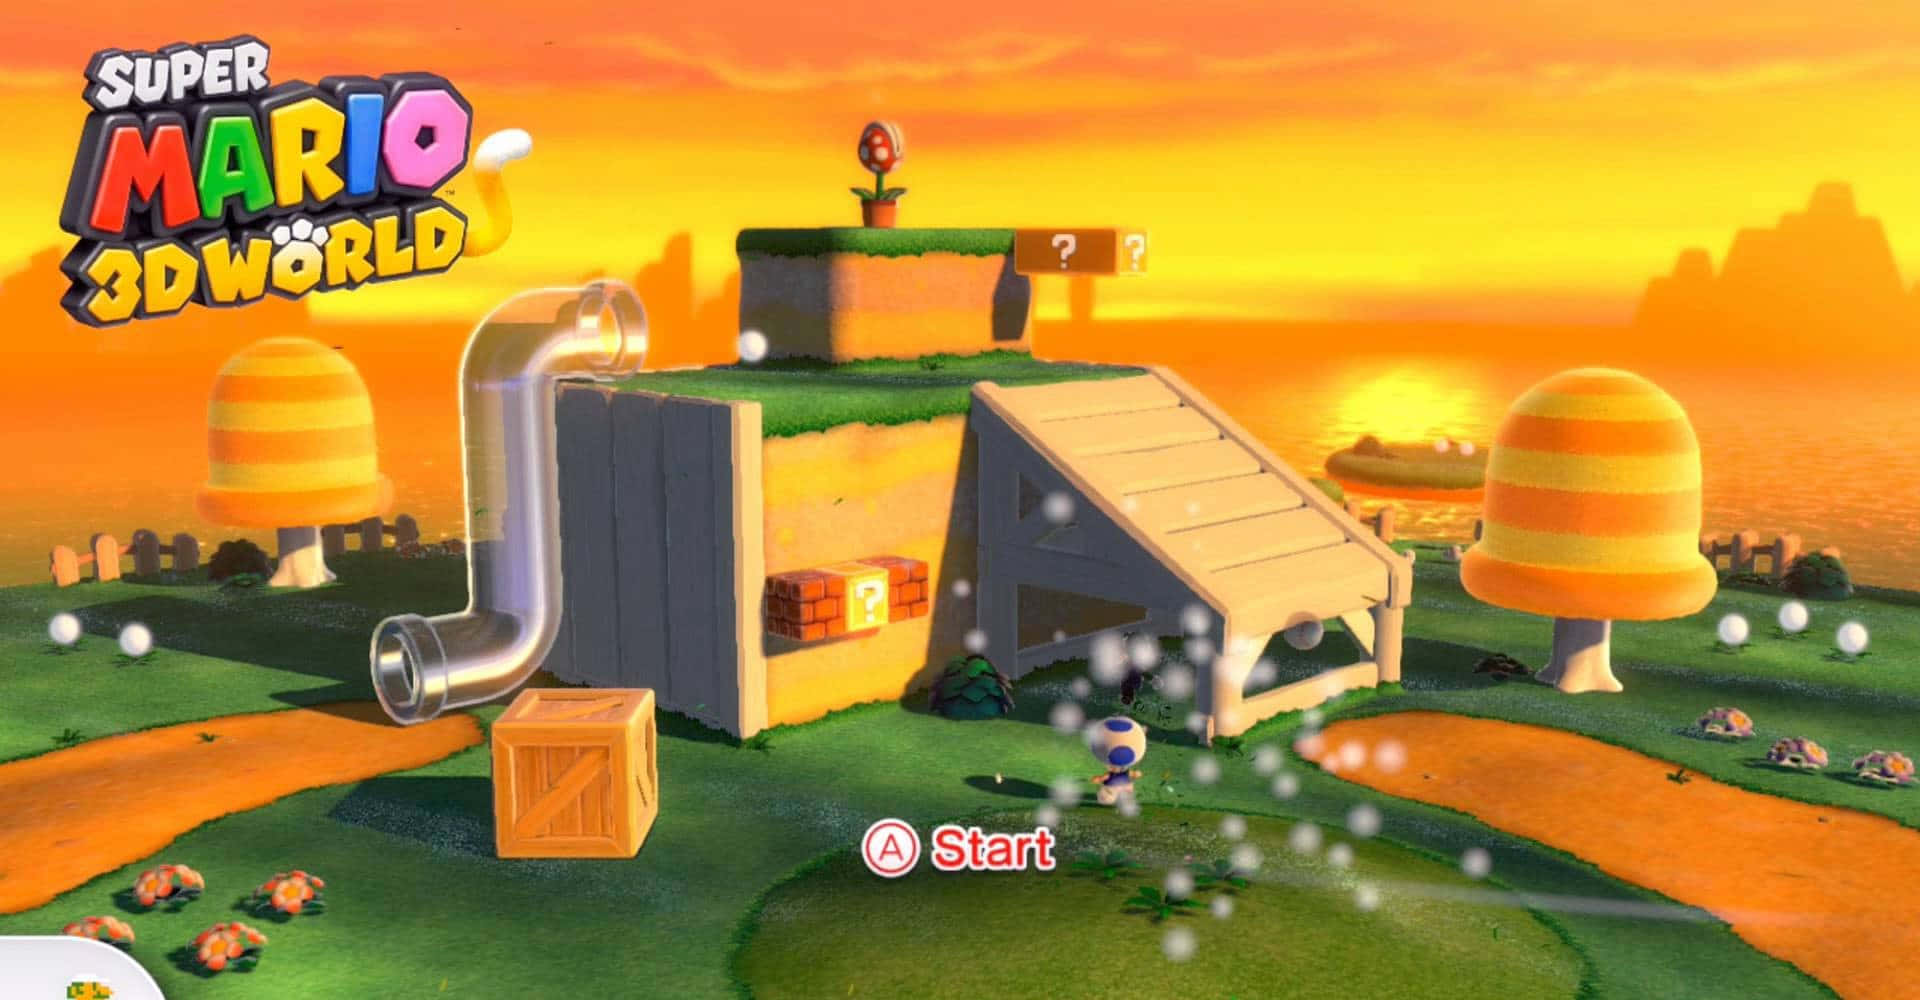 World - Springs over sejr! Mario er klar til at spille Super Mario 3D World. Wallpaper